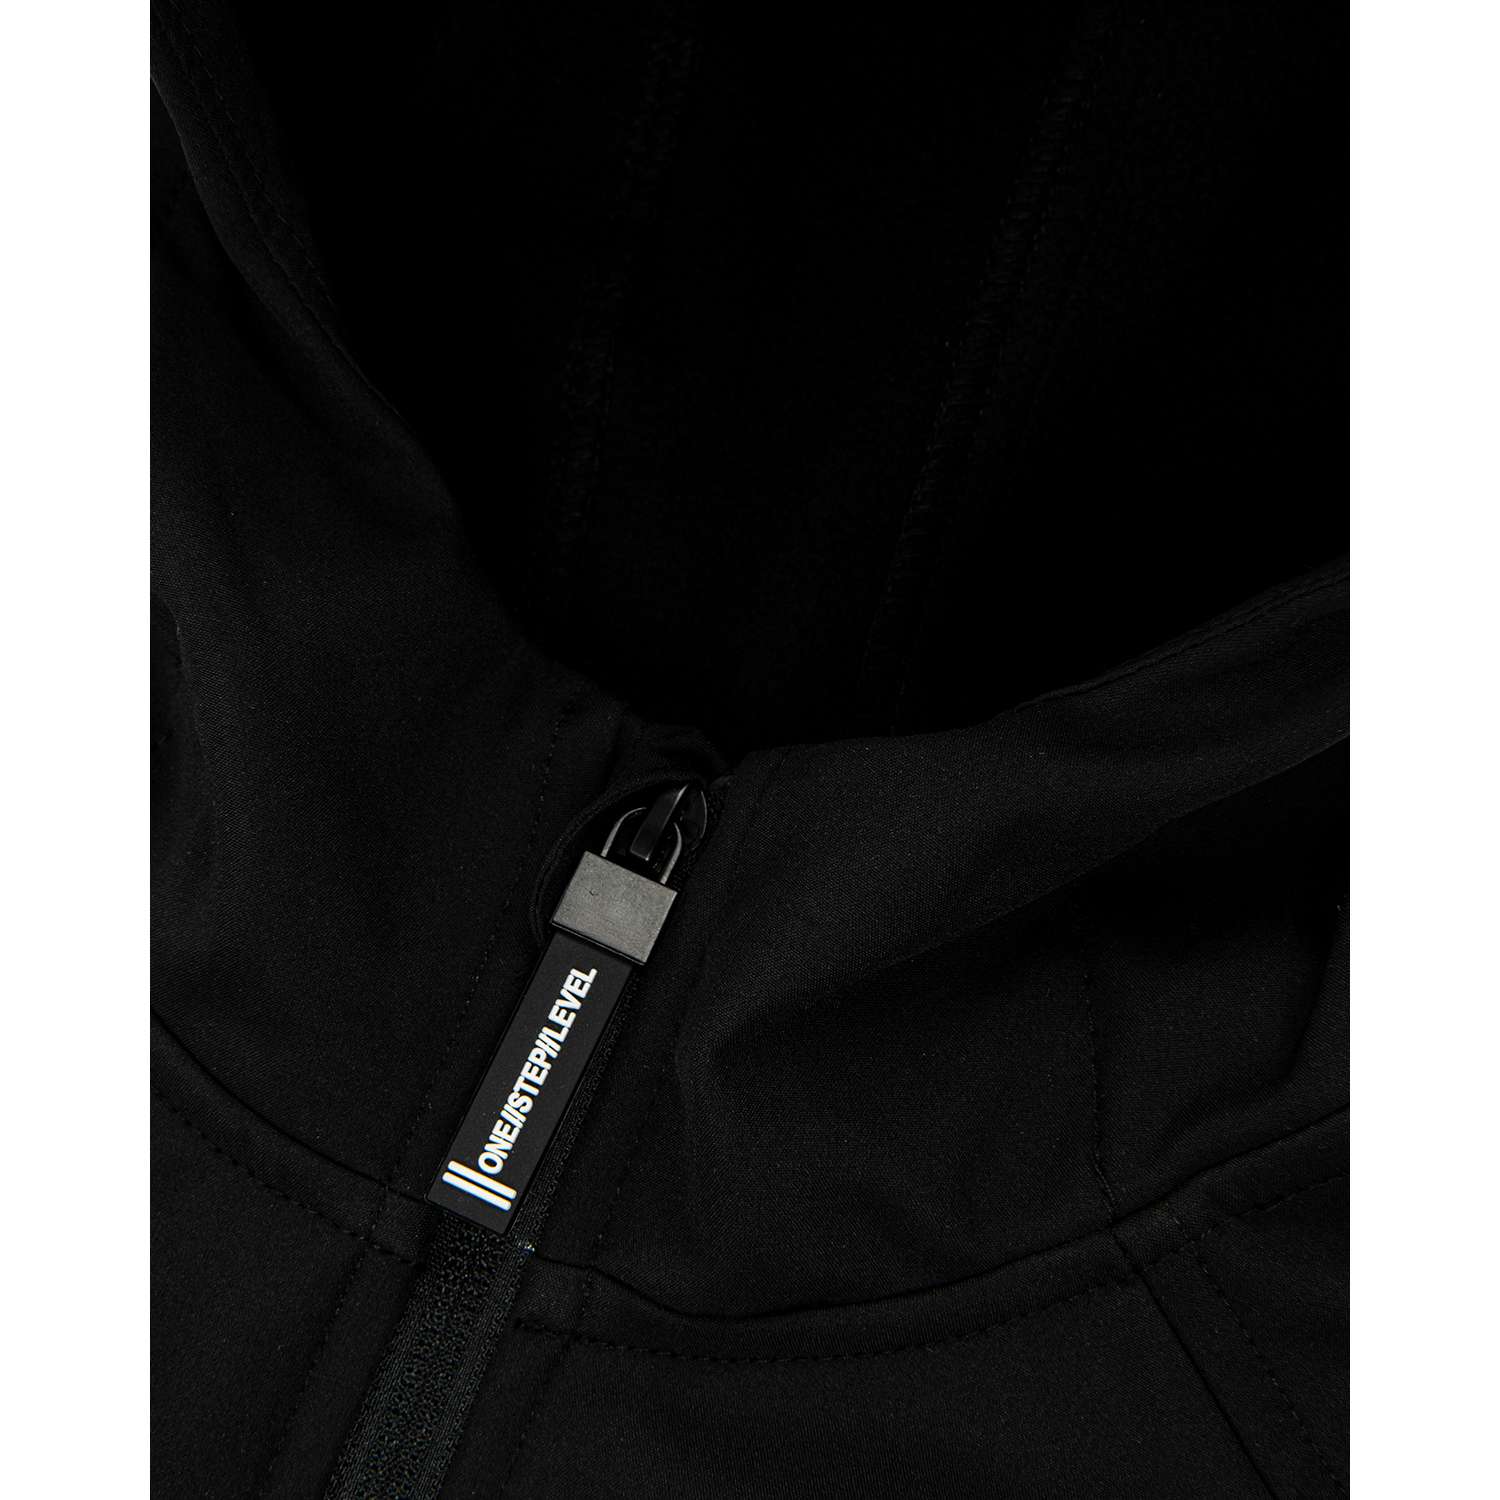 Куртка Futurino Cool SS22-B71FCtb-99 - фото 5